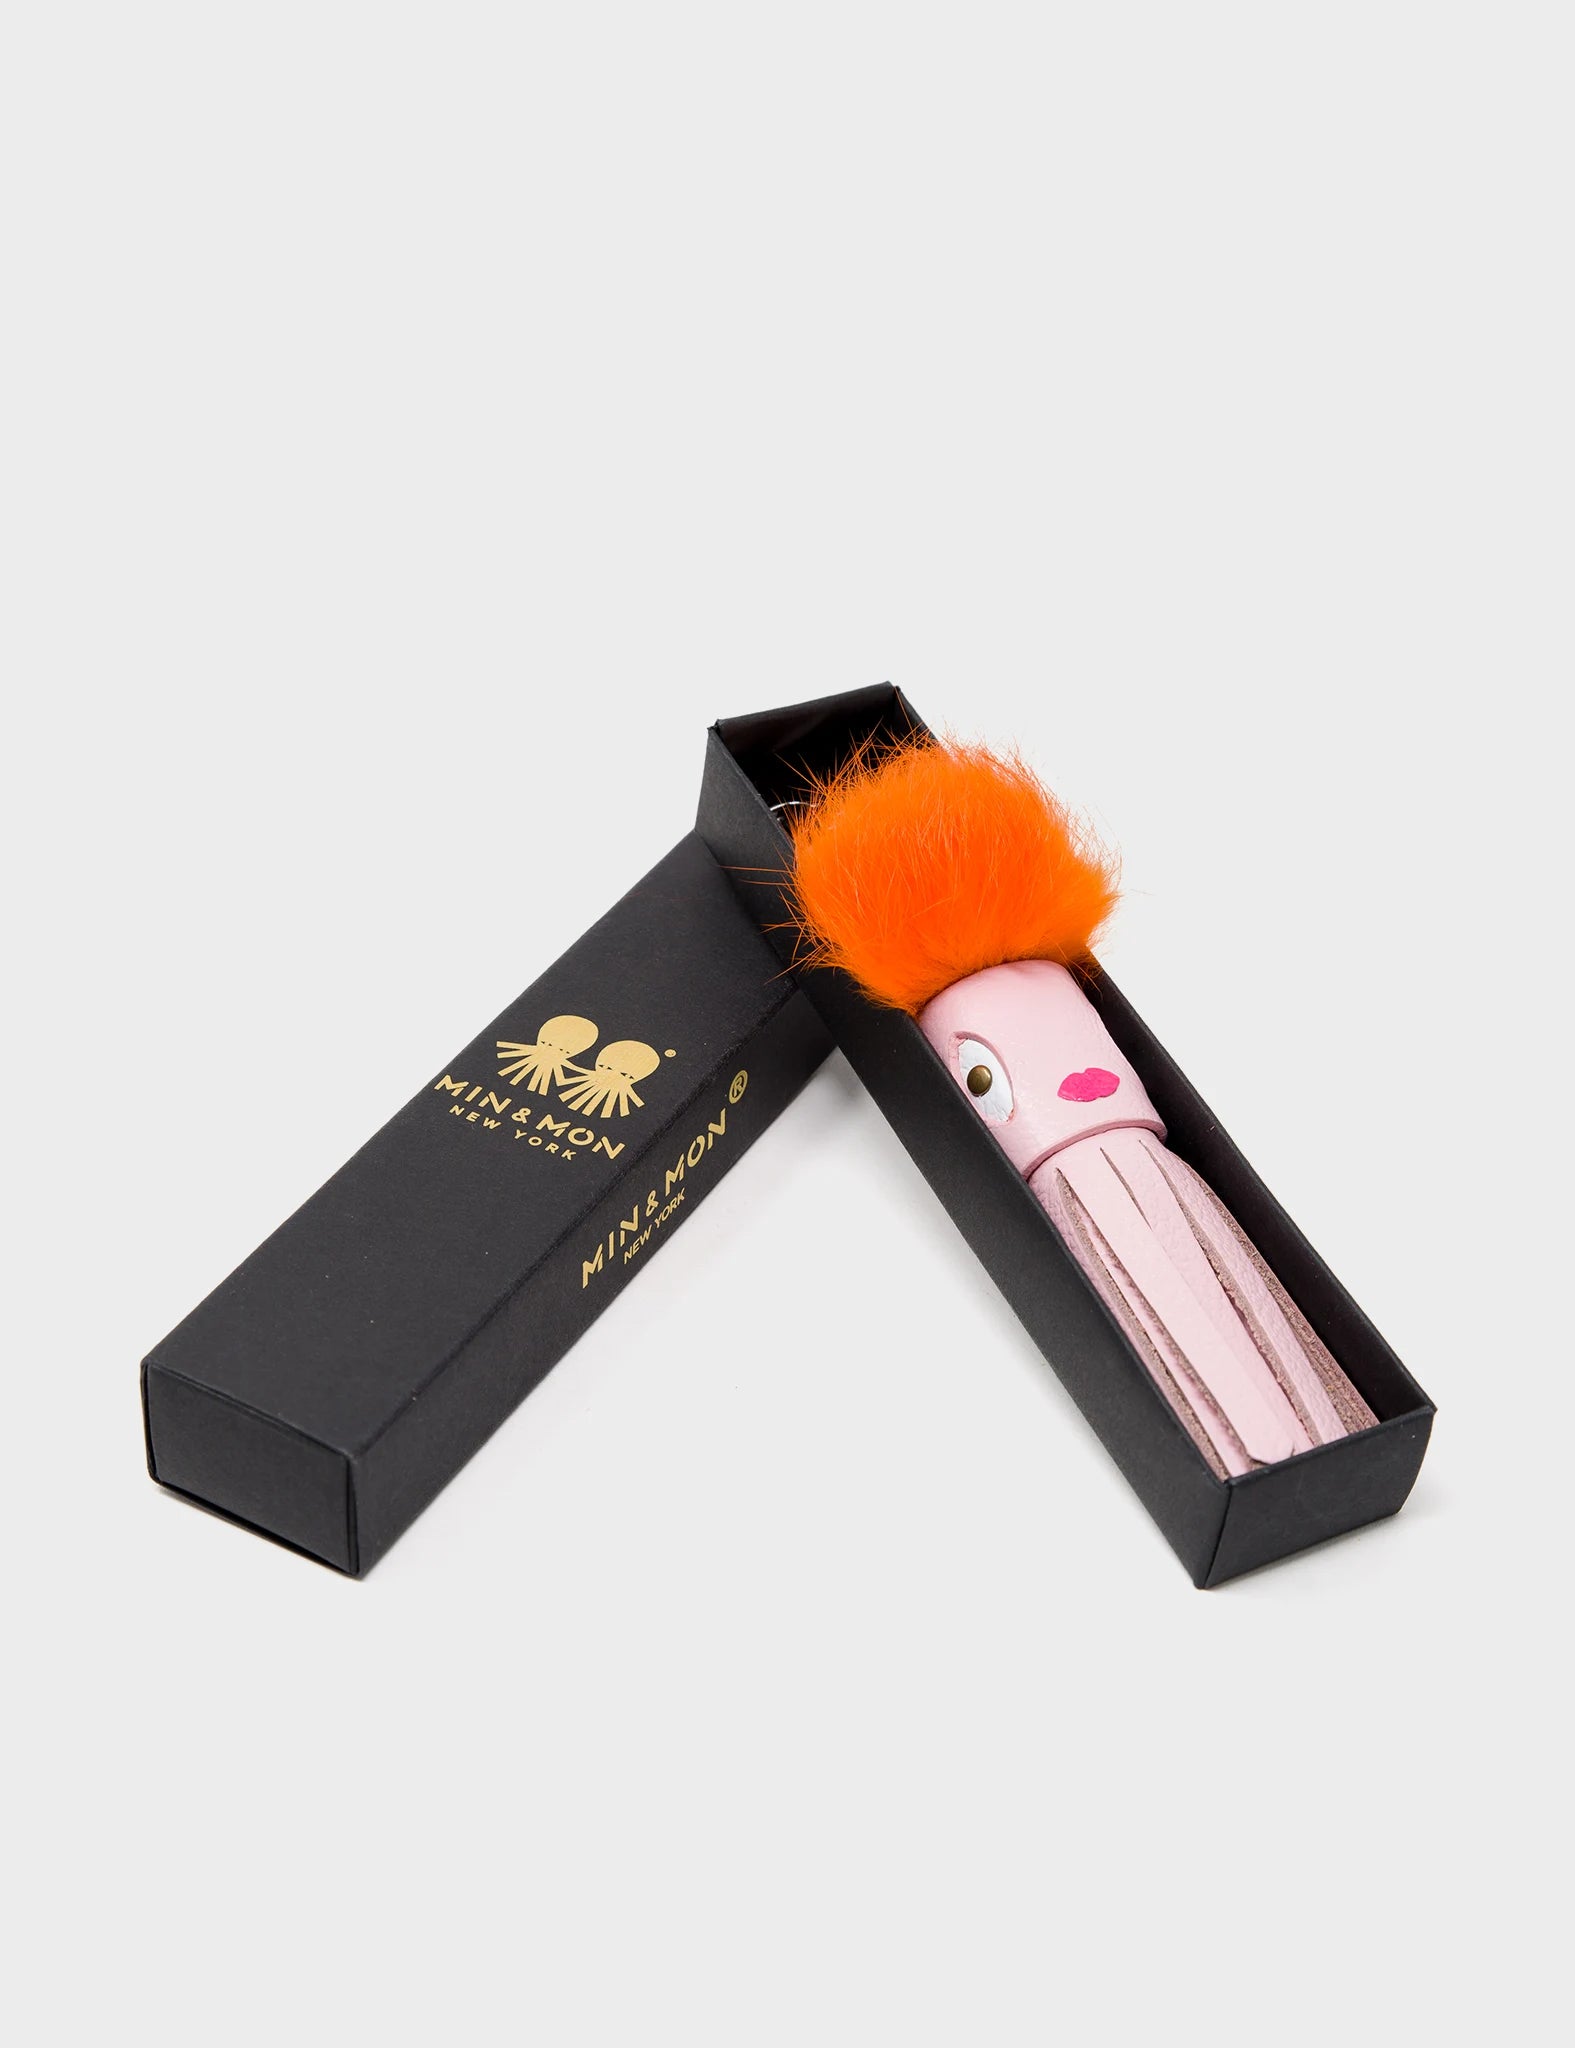 Calamari Charm - Parfait Pink and Orange Fur Keychain - Box